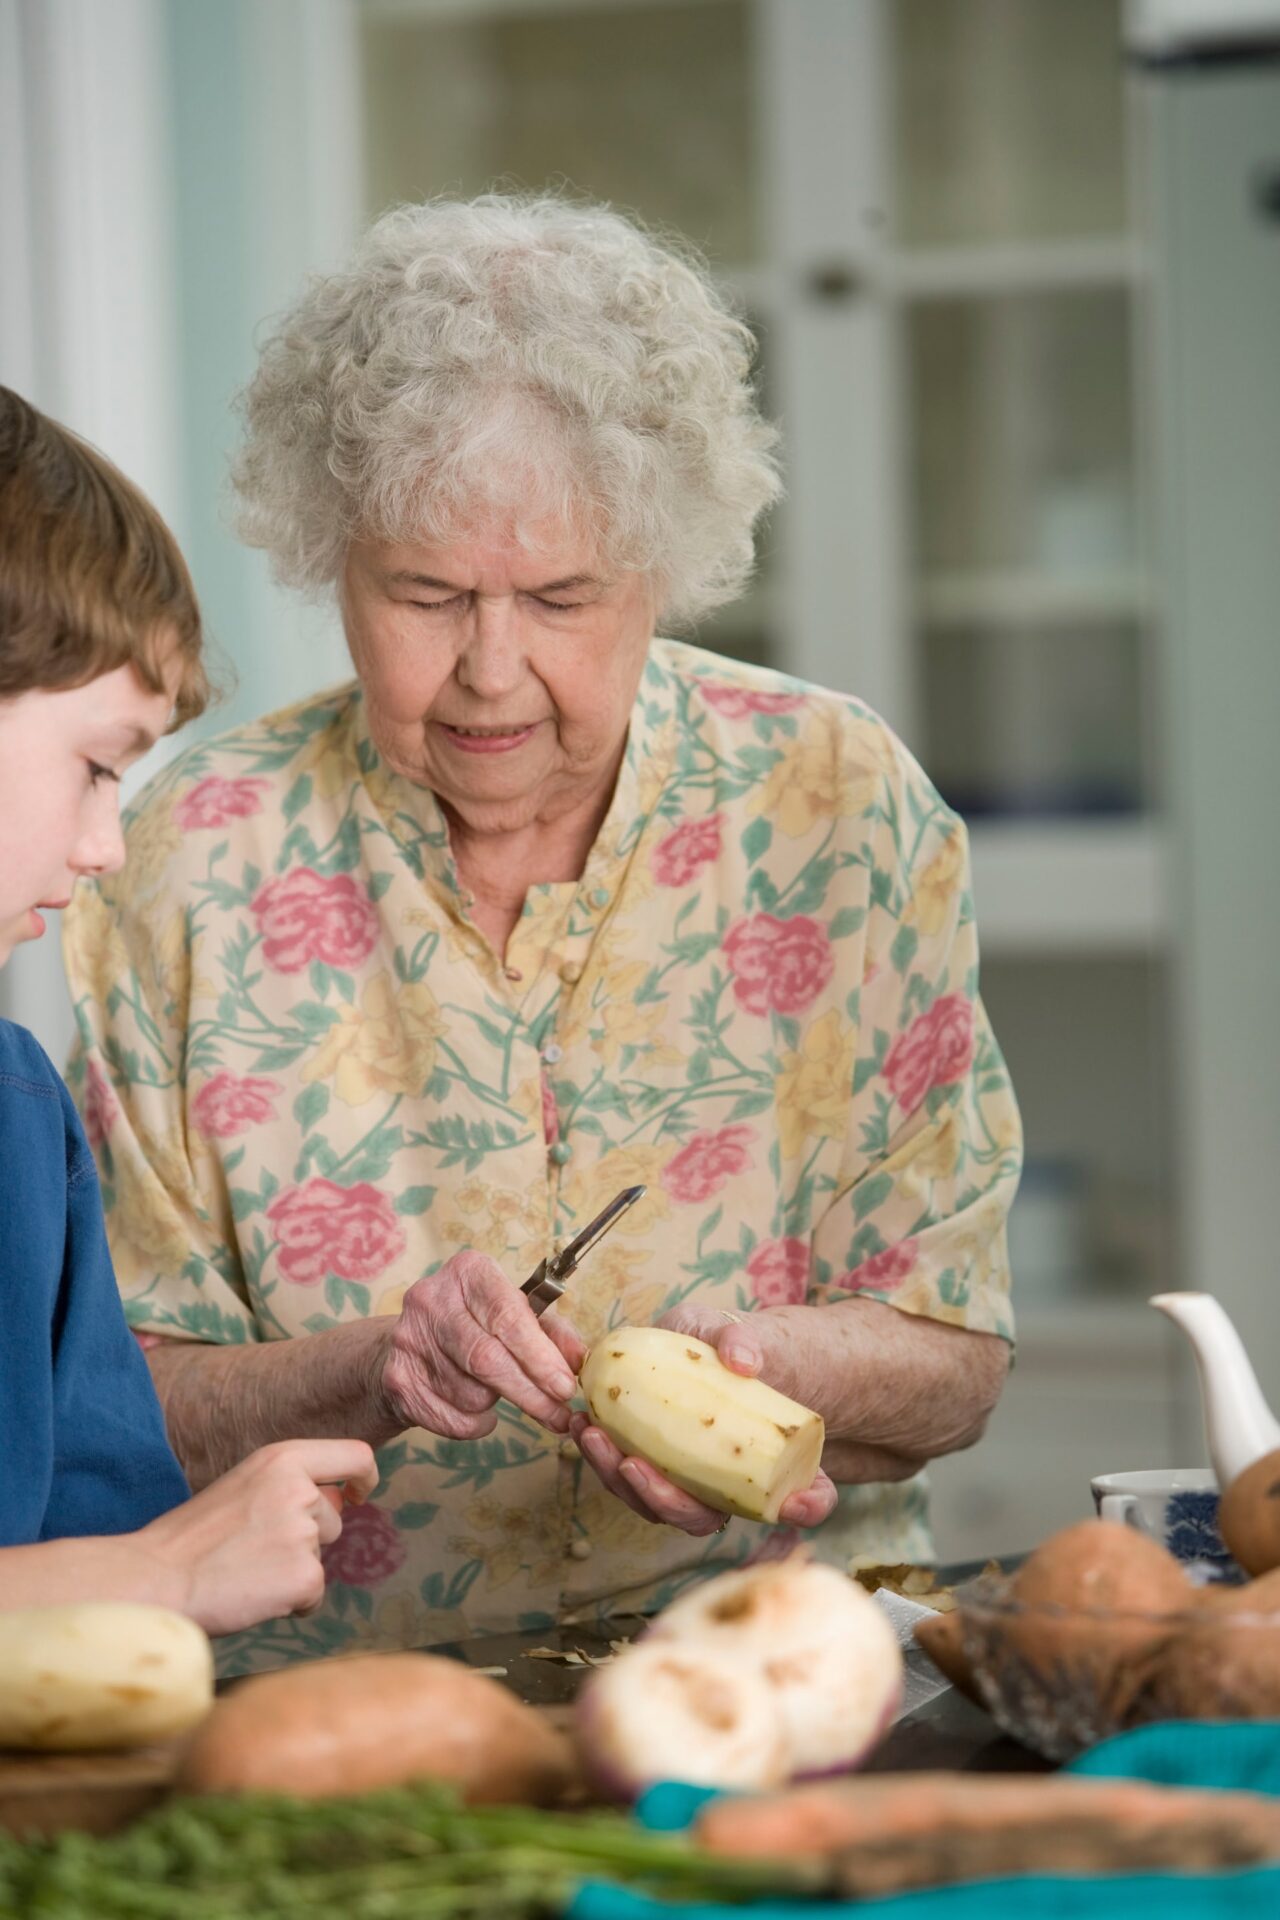 Grandmother peeling potatoes with her grandchild